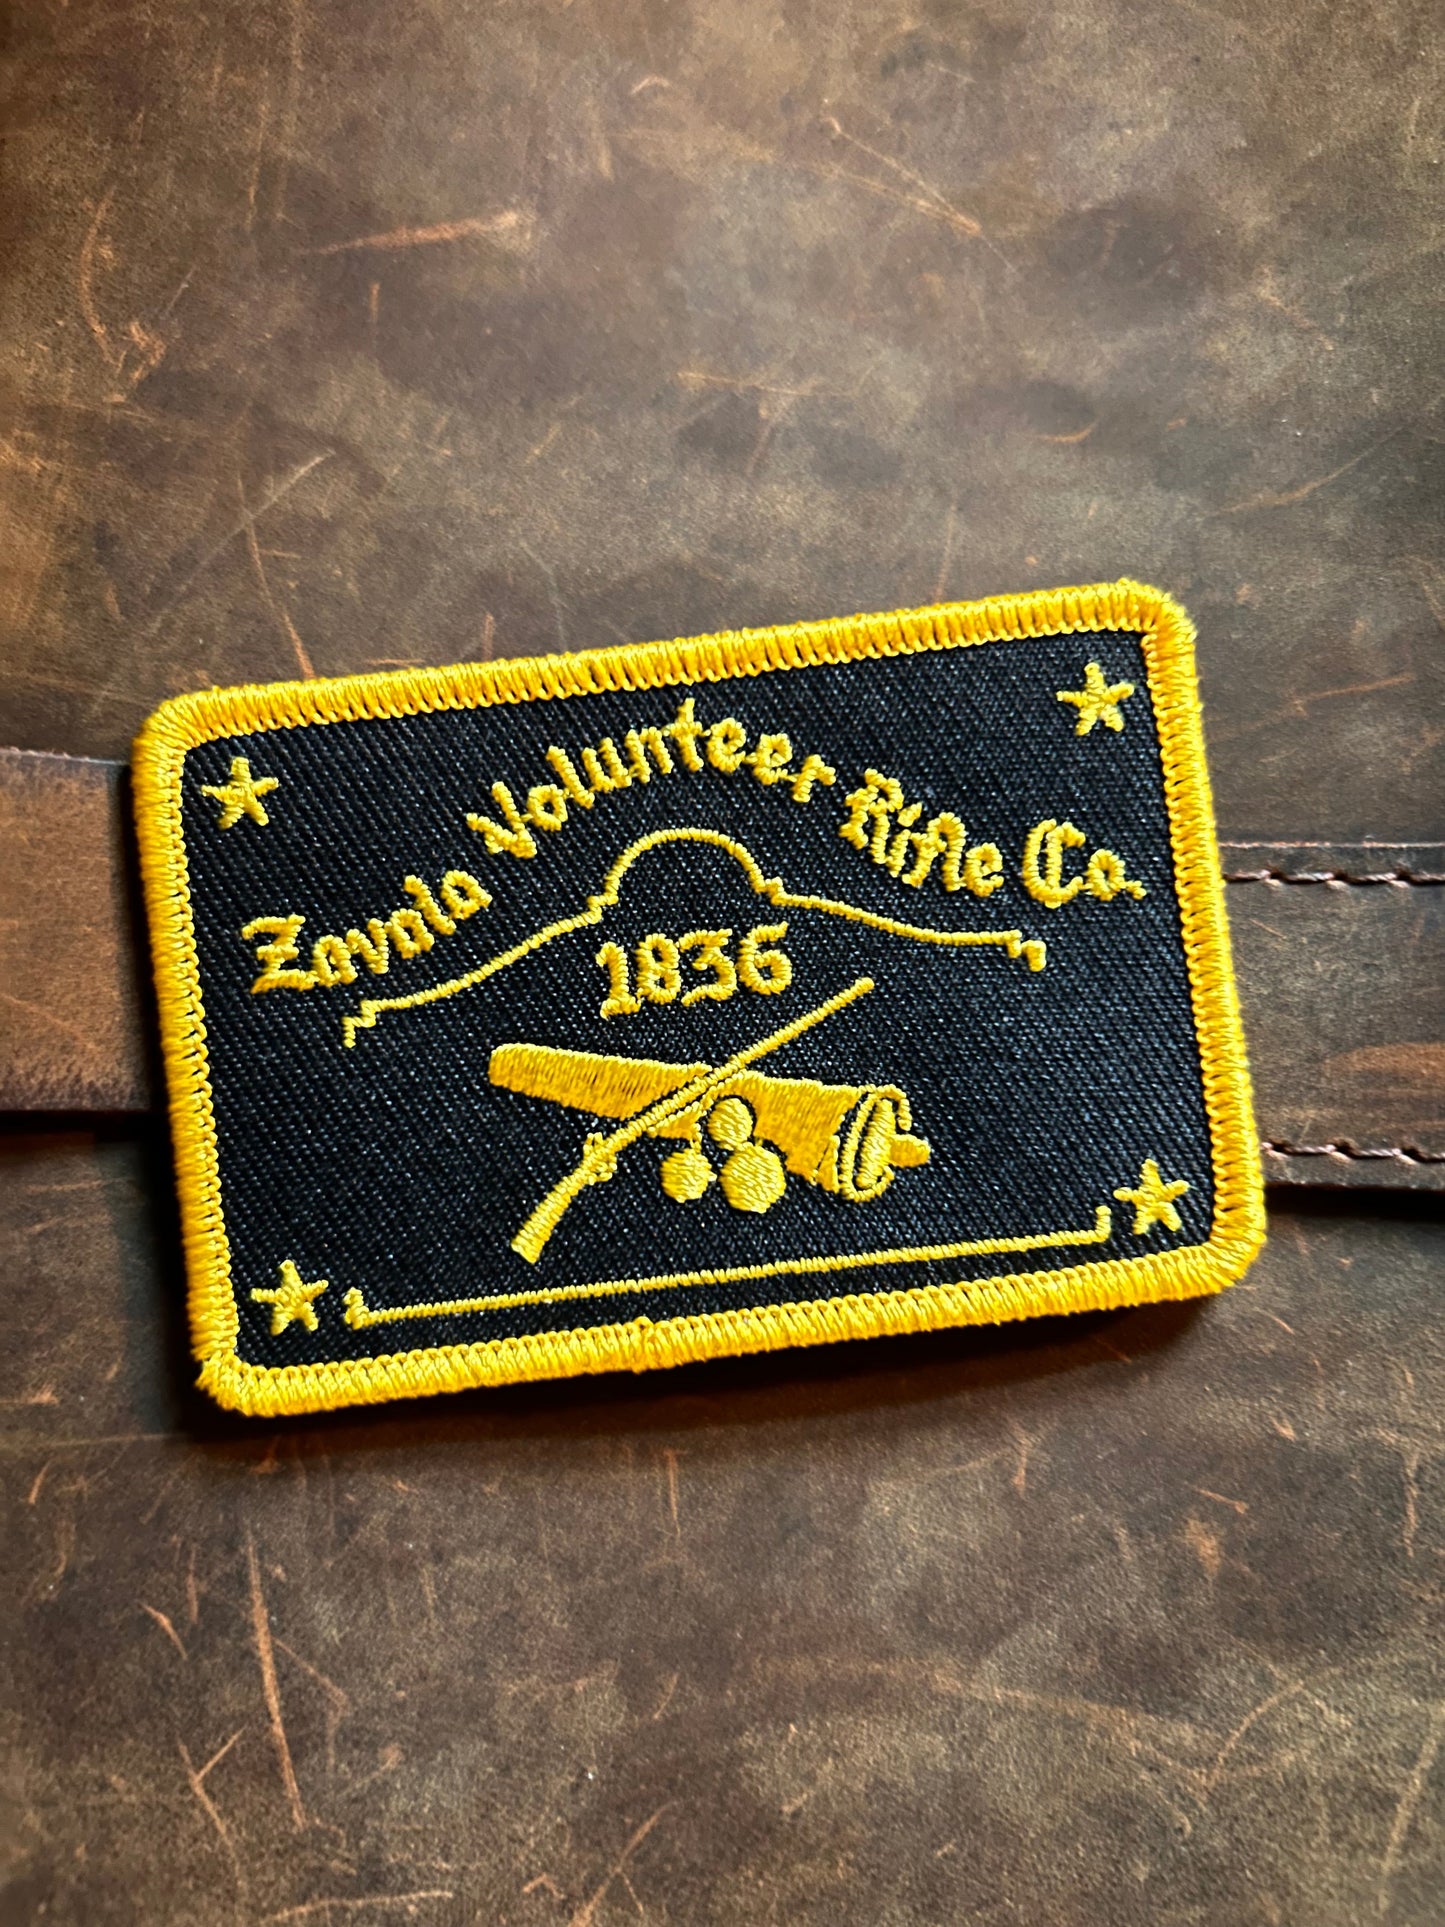 Zavala Volunteer Rifles Patch - Zavala 1836